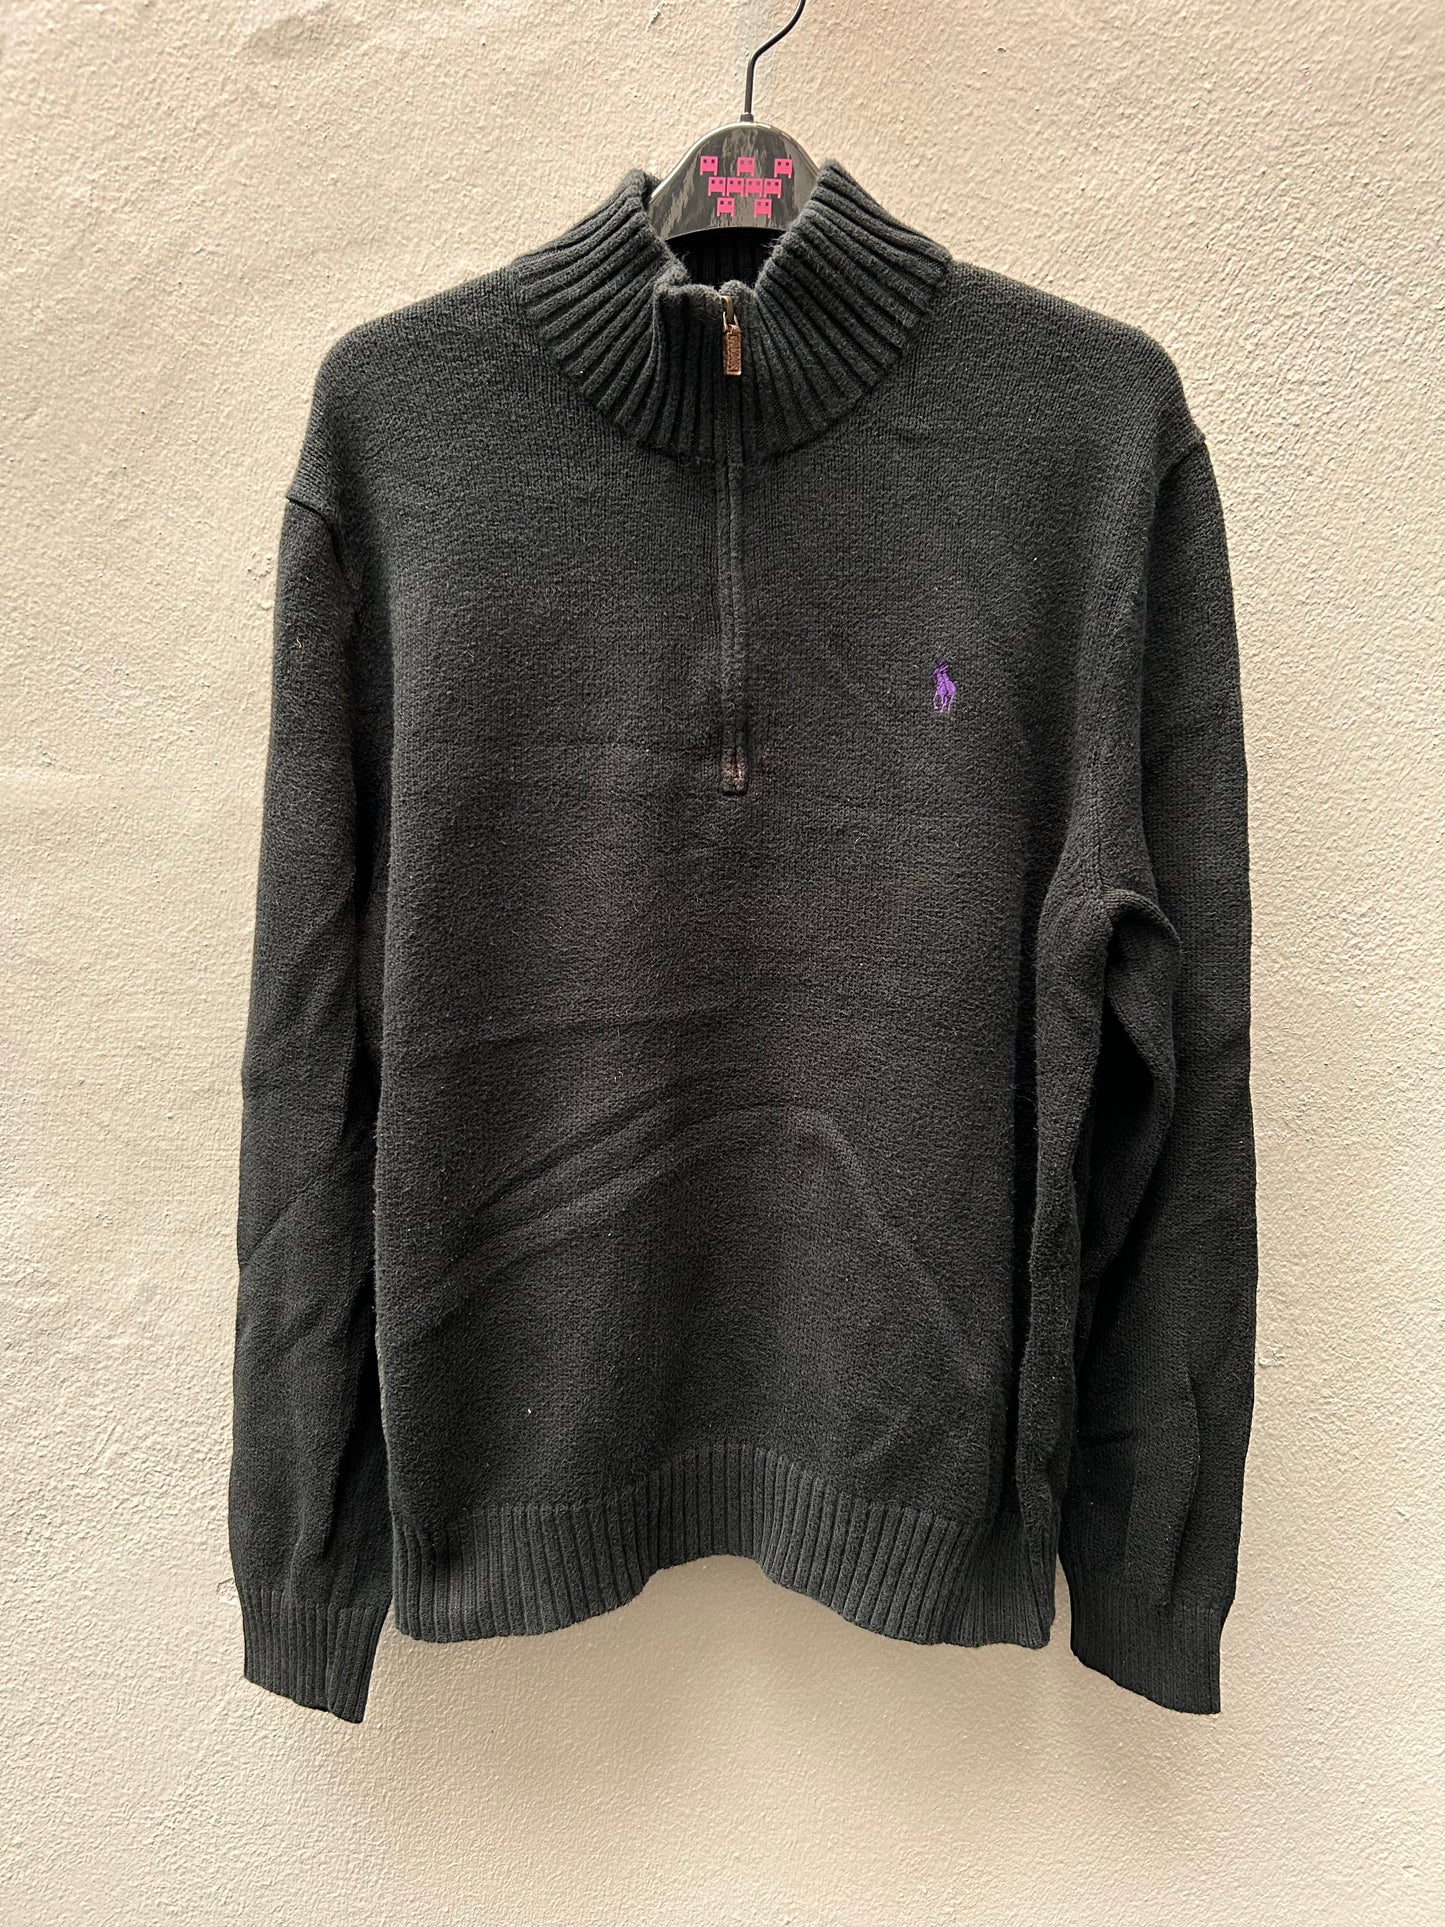 3/4 Zipped Black Ralph Lauren Sweater